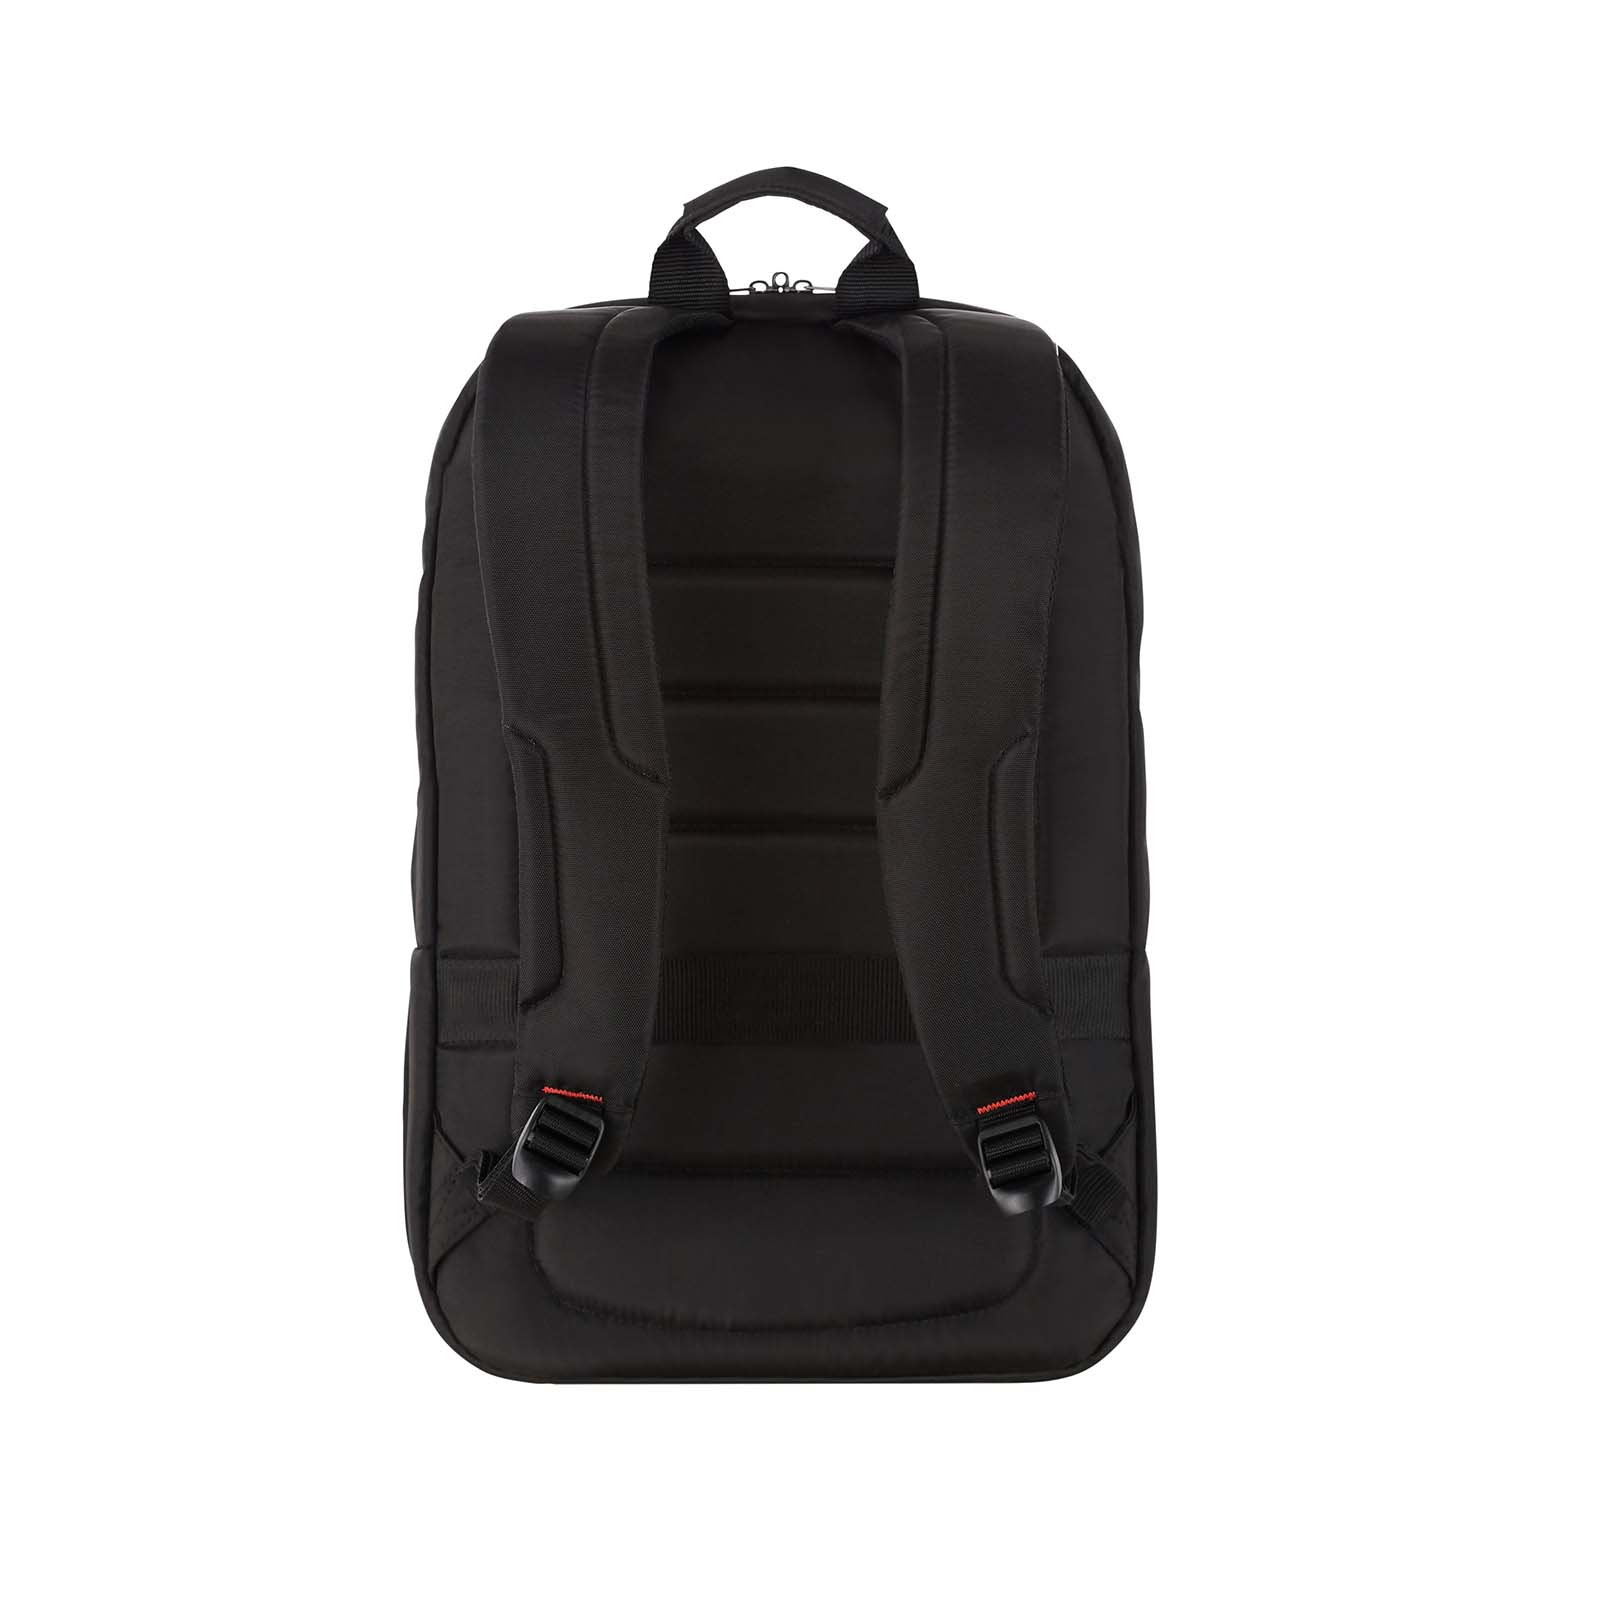 Samsonite-Guardit-2-17-Inch-Laptop-Backpack-Back